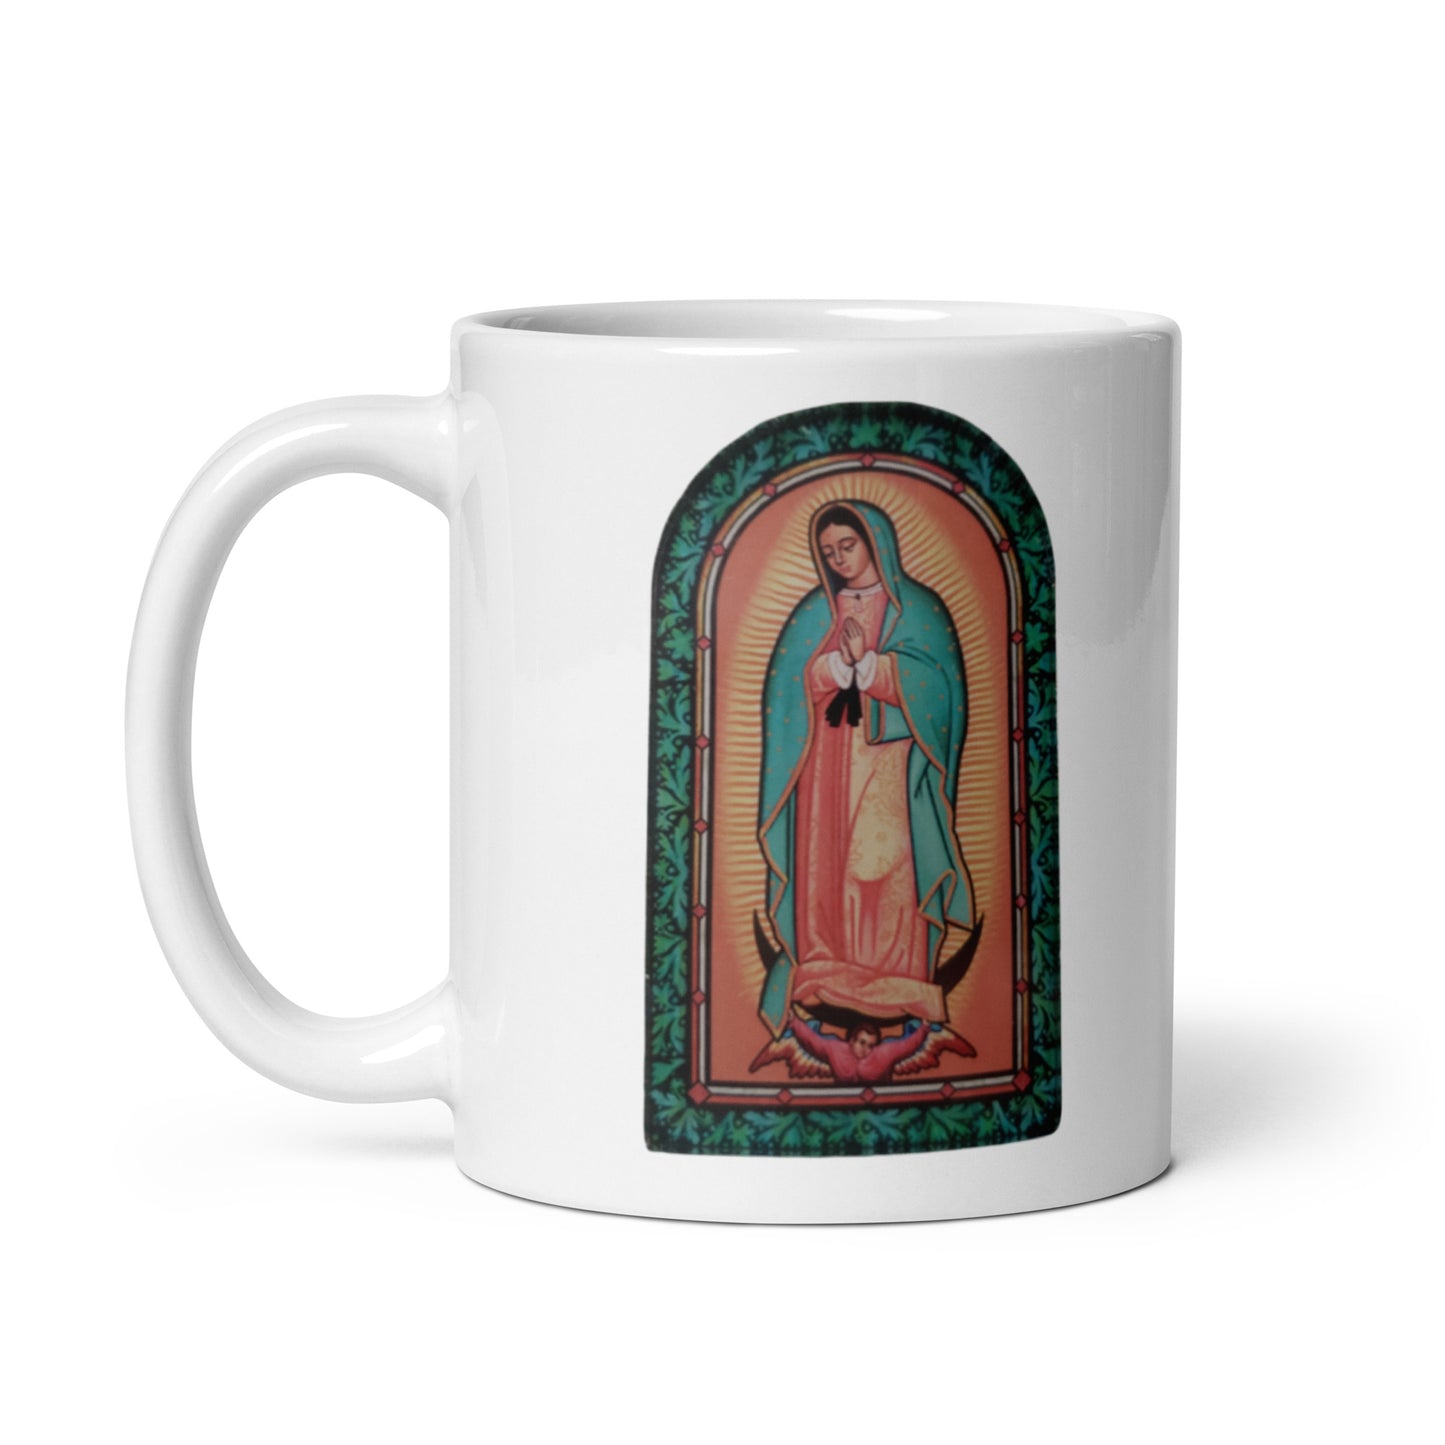 Our Lady of Guadalupe Mug